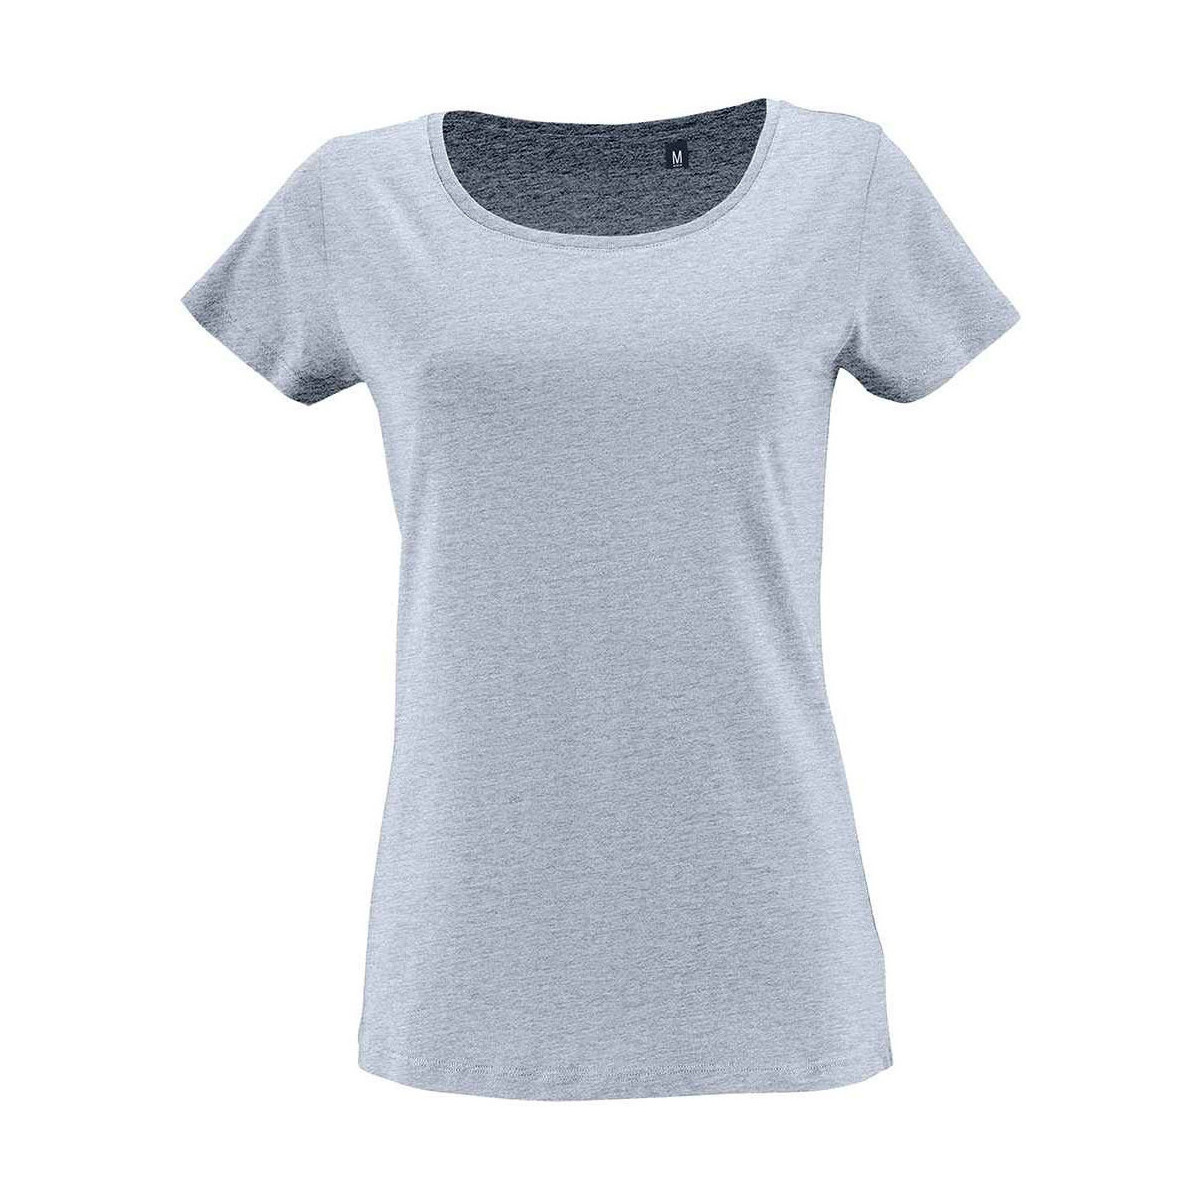 textil Mujer Camisetas manga larga Sols Milo Azul